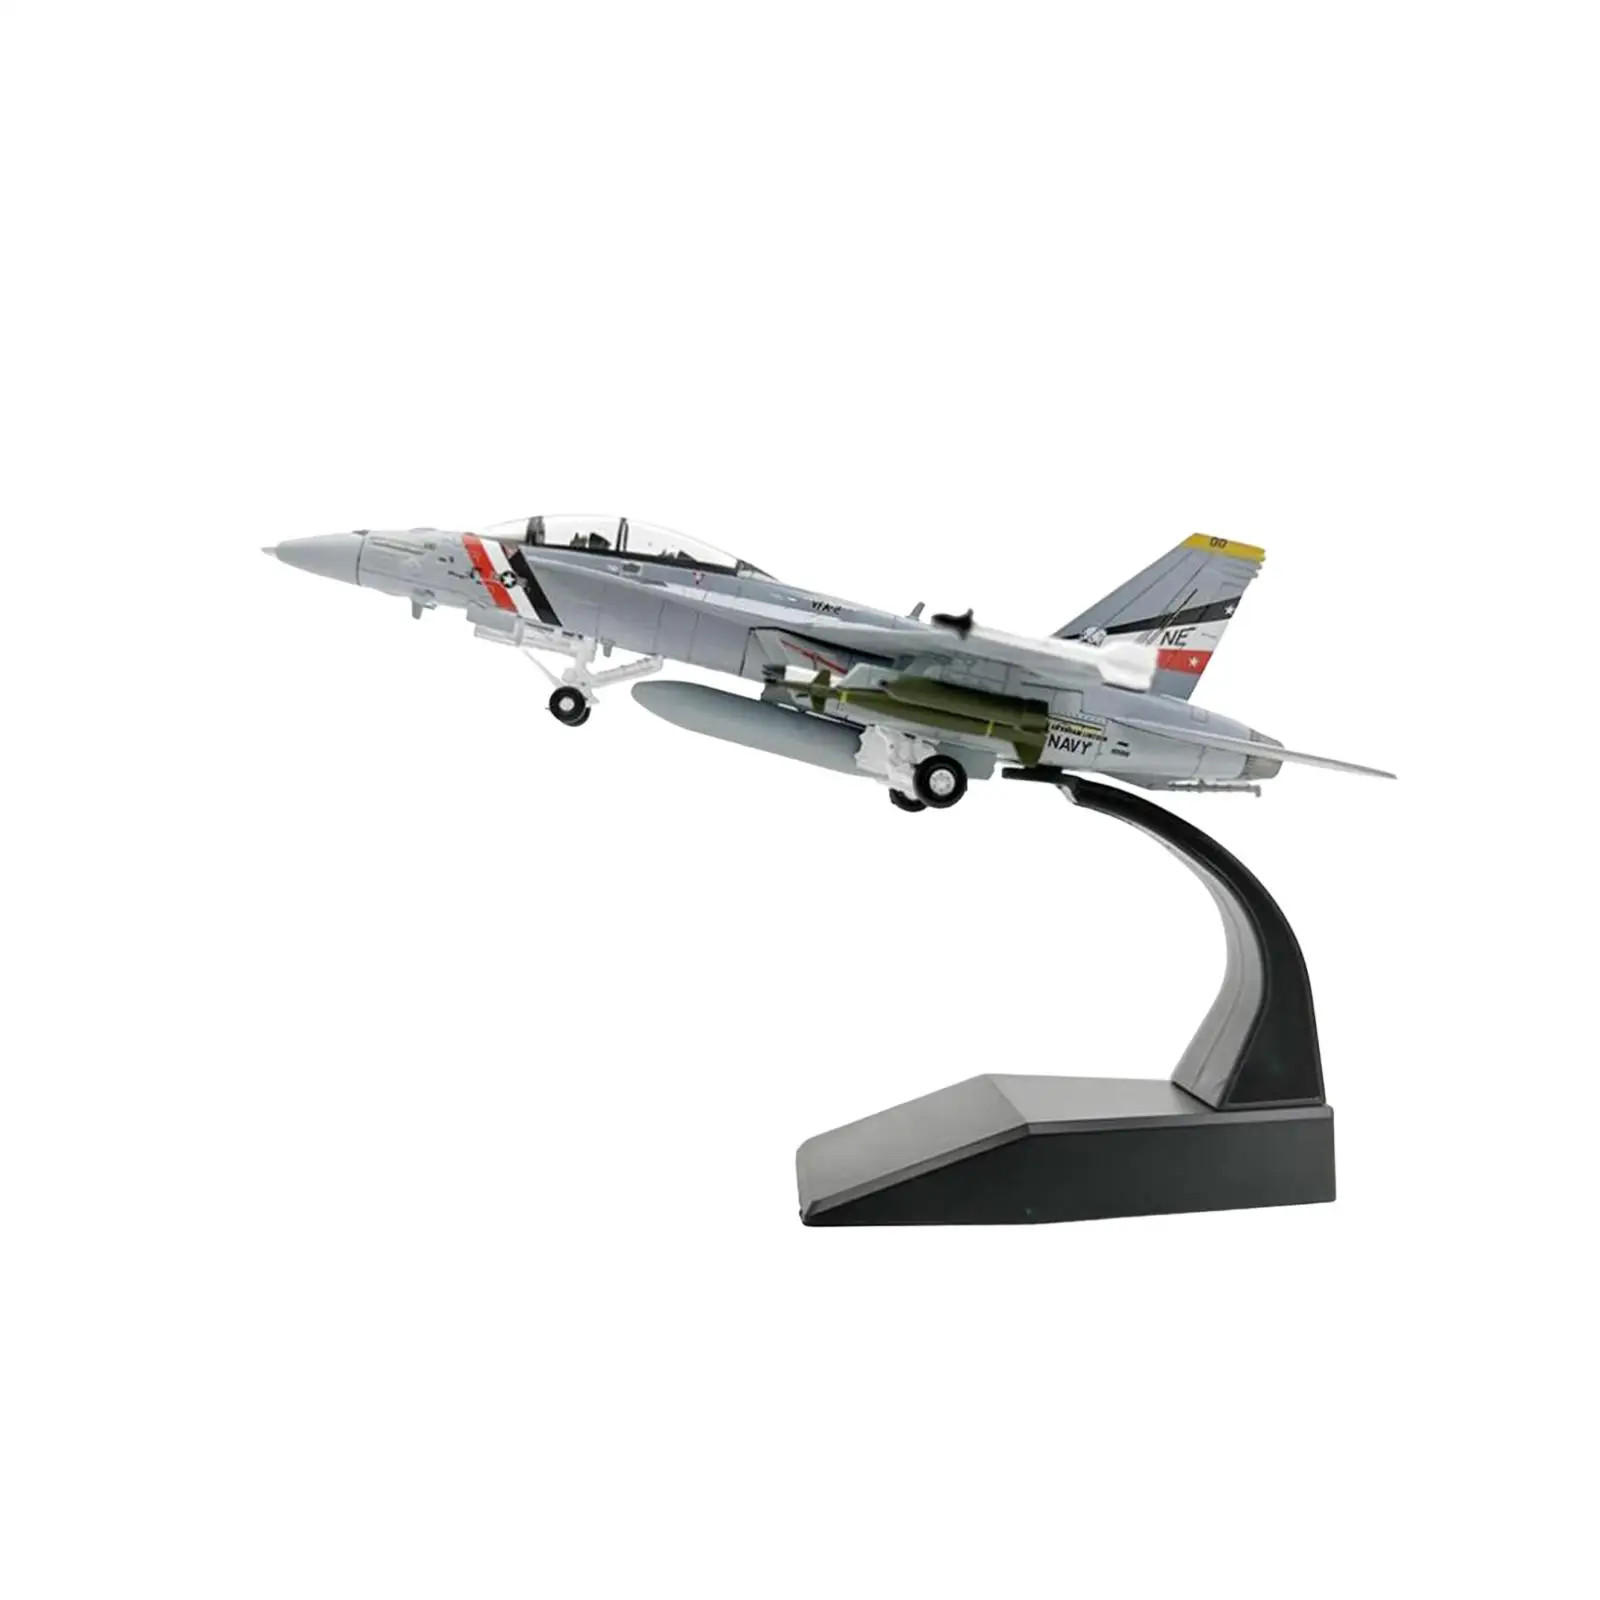 1/100 Scale Jet Aircraft High Detailed Diecast Model Plane Toys for Office Livingroom Shelf Bedroom Tabletop Decor